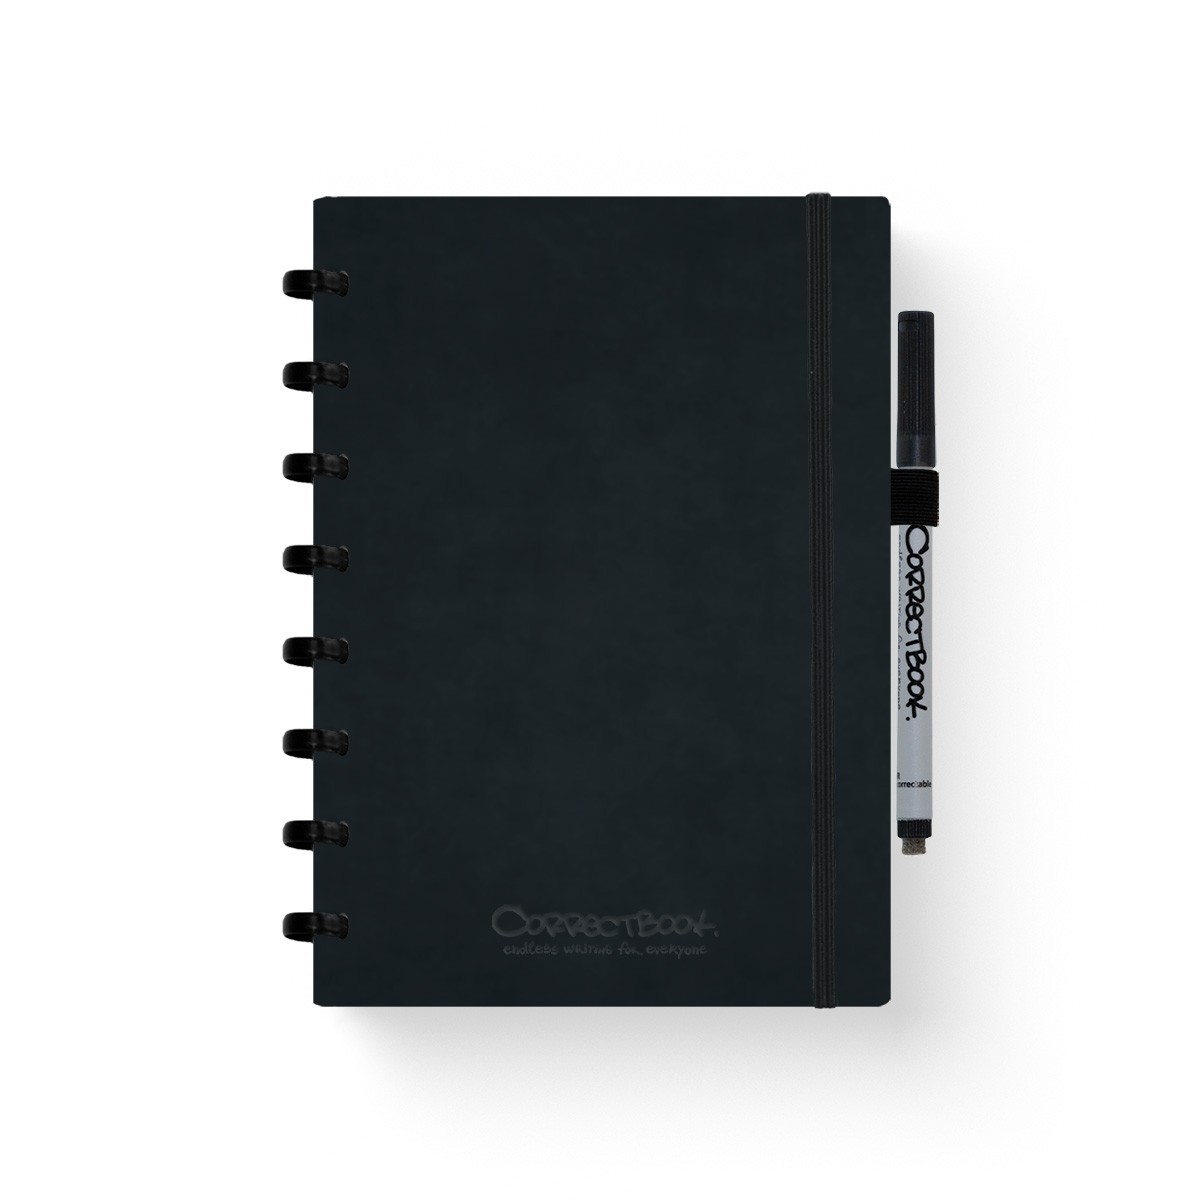 Correctbook Kunstleer Hardcover A5 Ink Black Gelinieerd